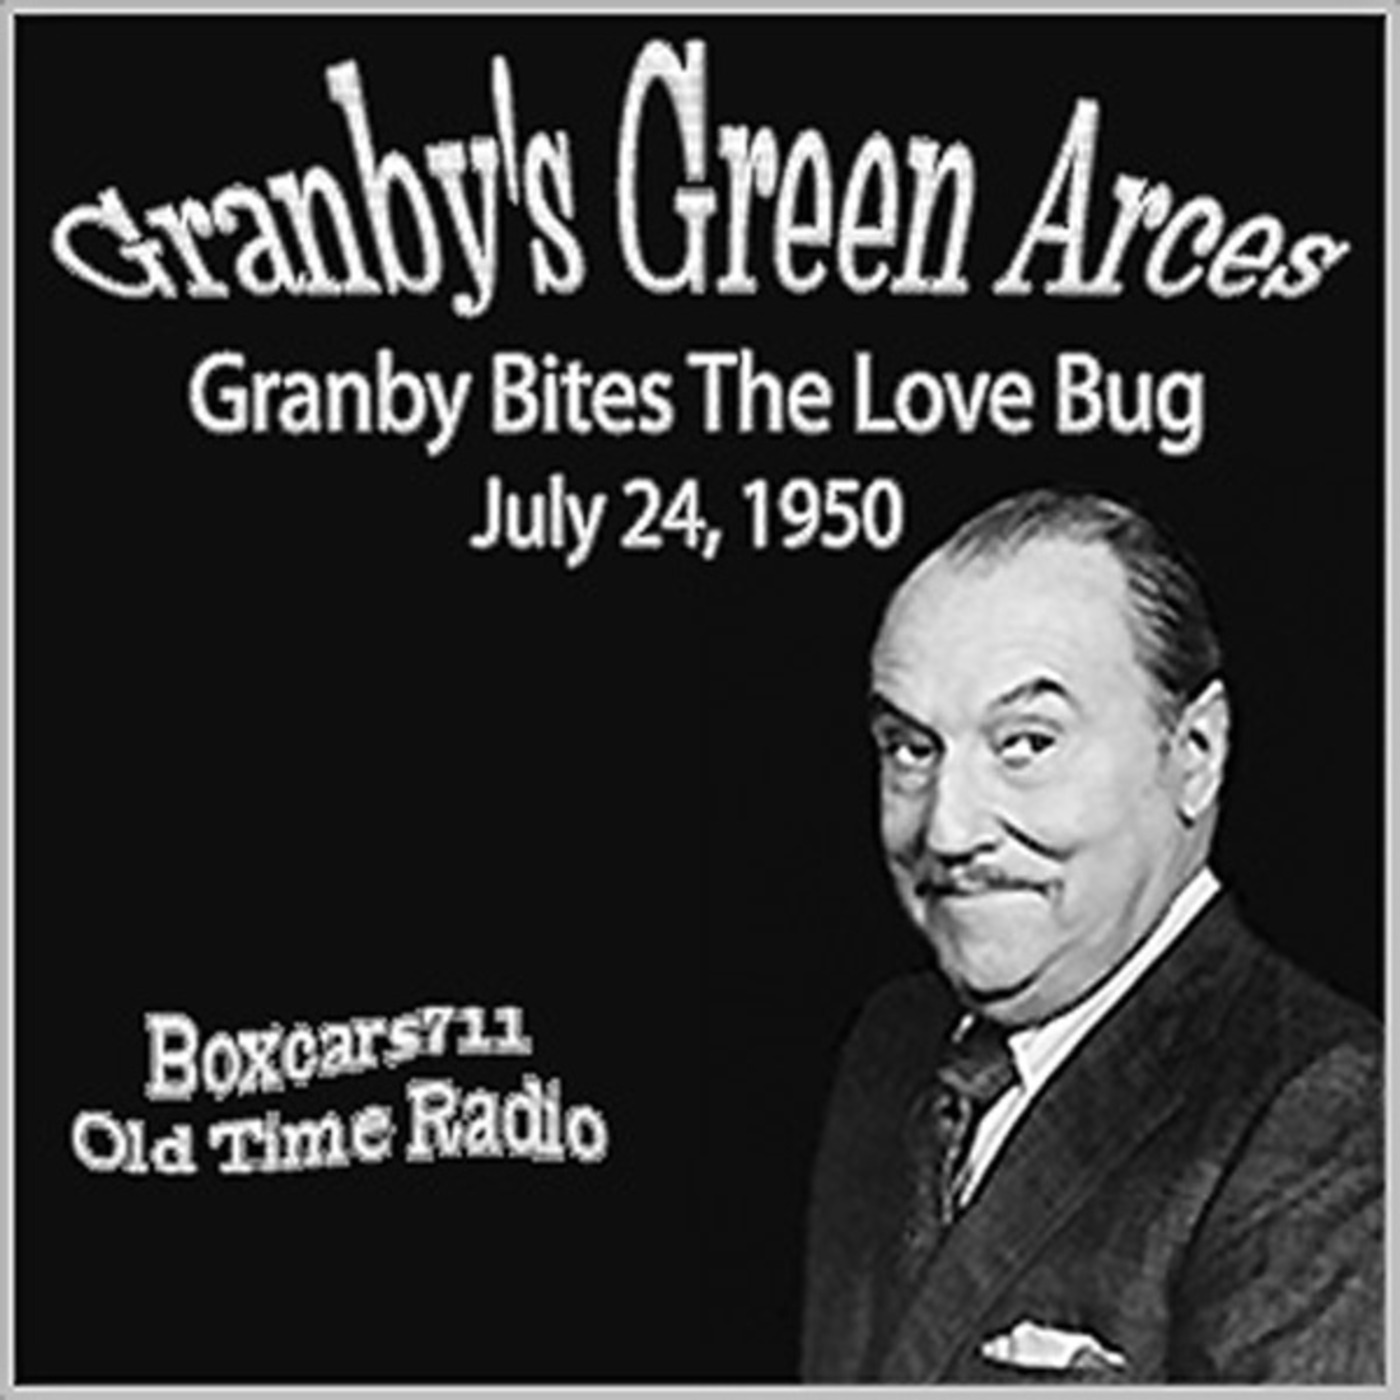 Episode 9512: Granby's Green Acres - 